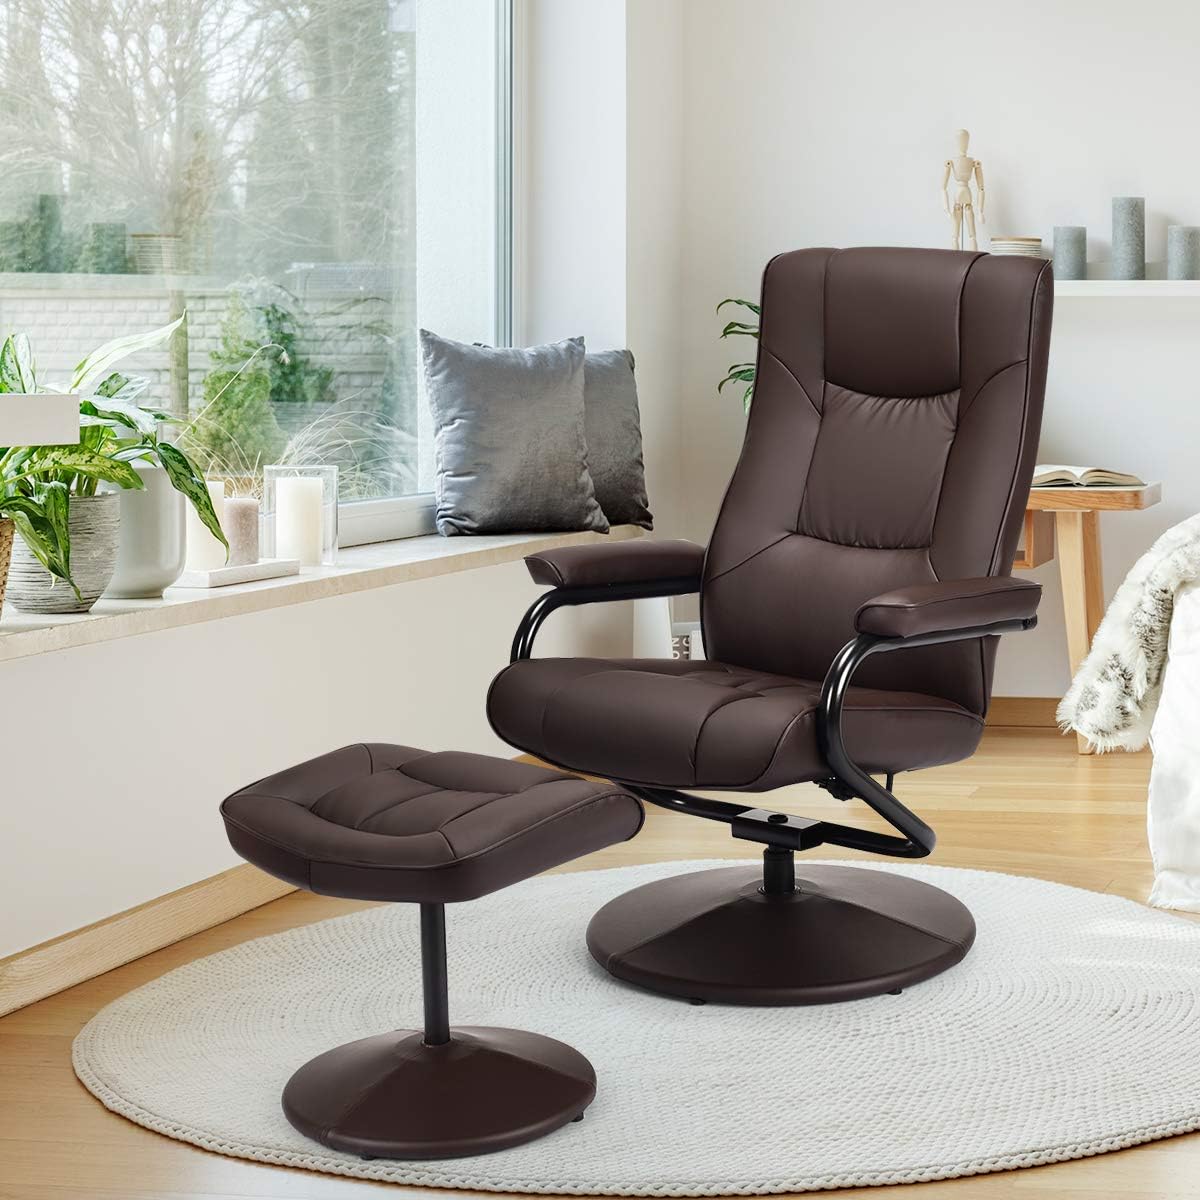 Giantex Recliner Chair w/Ottoman, 360 Degree Swivel PU [...]